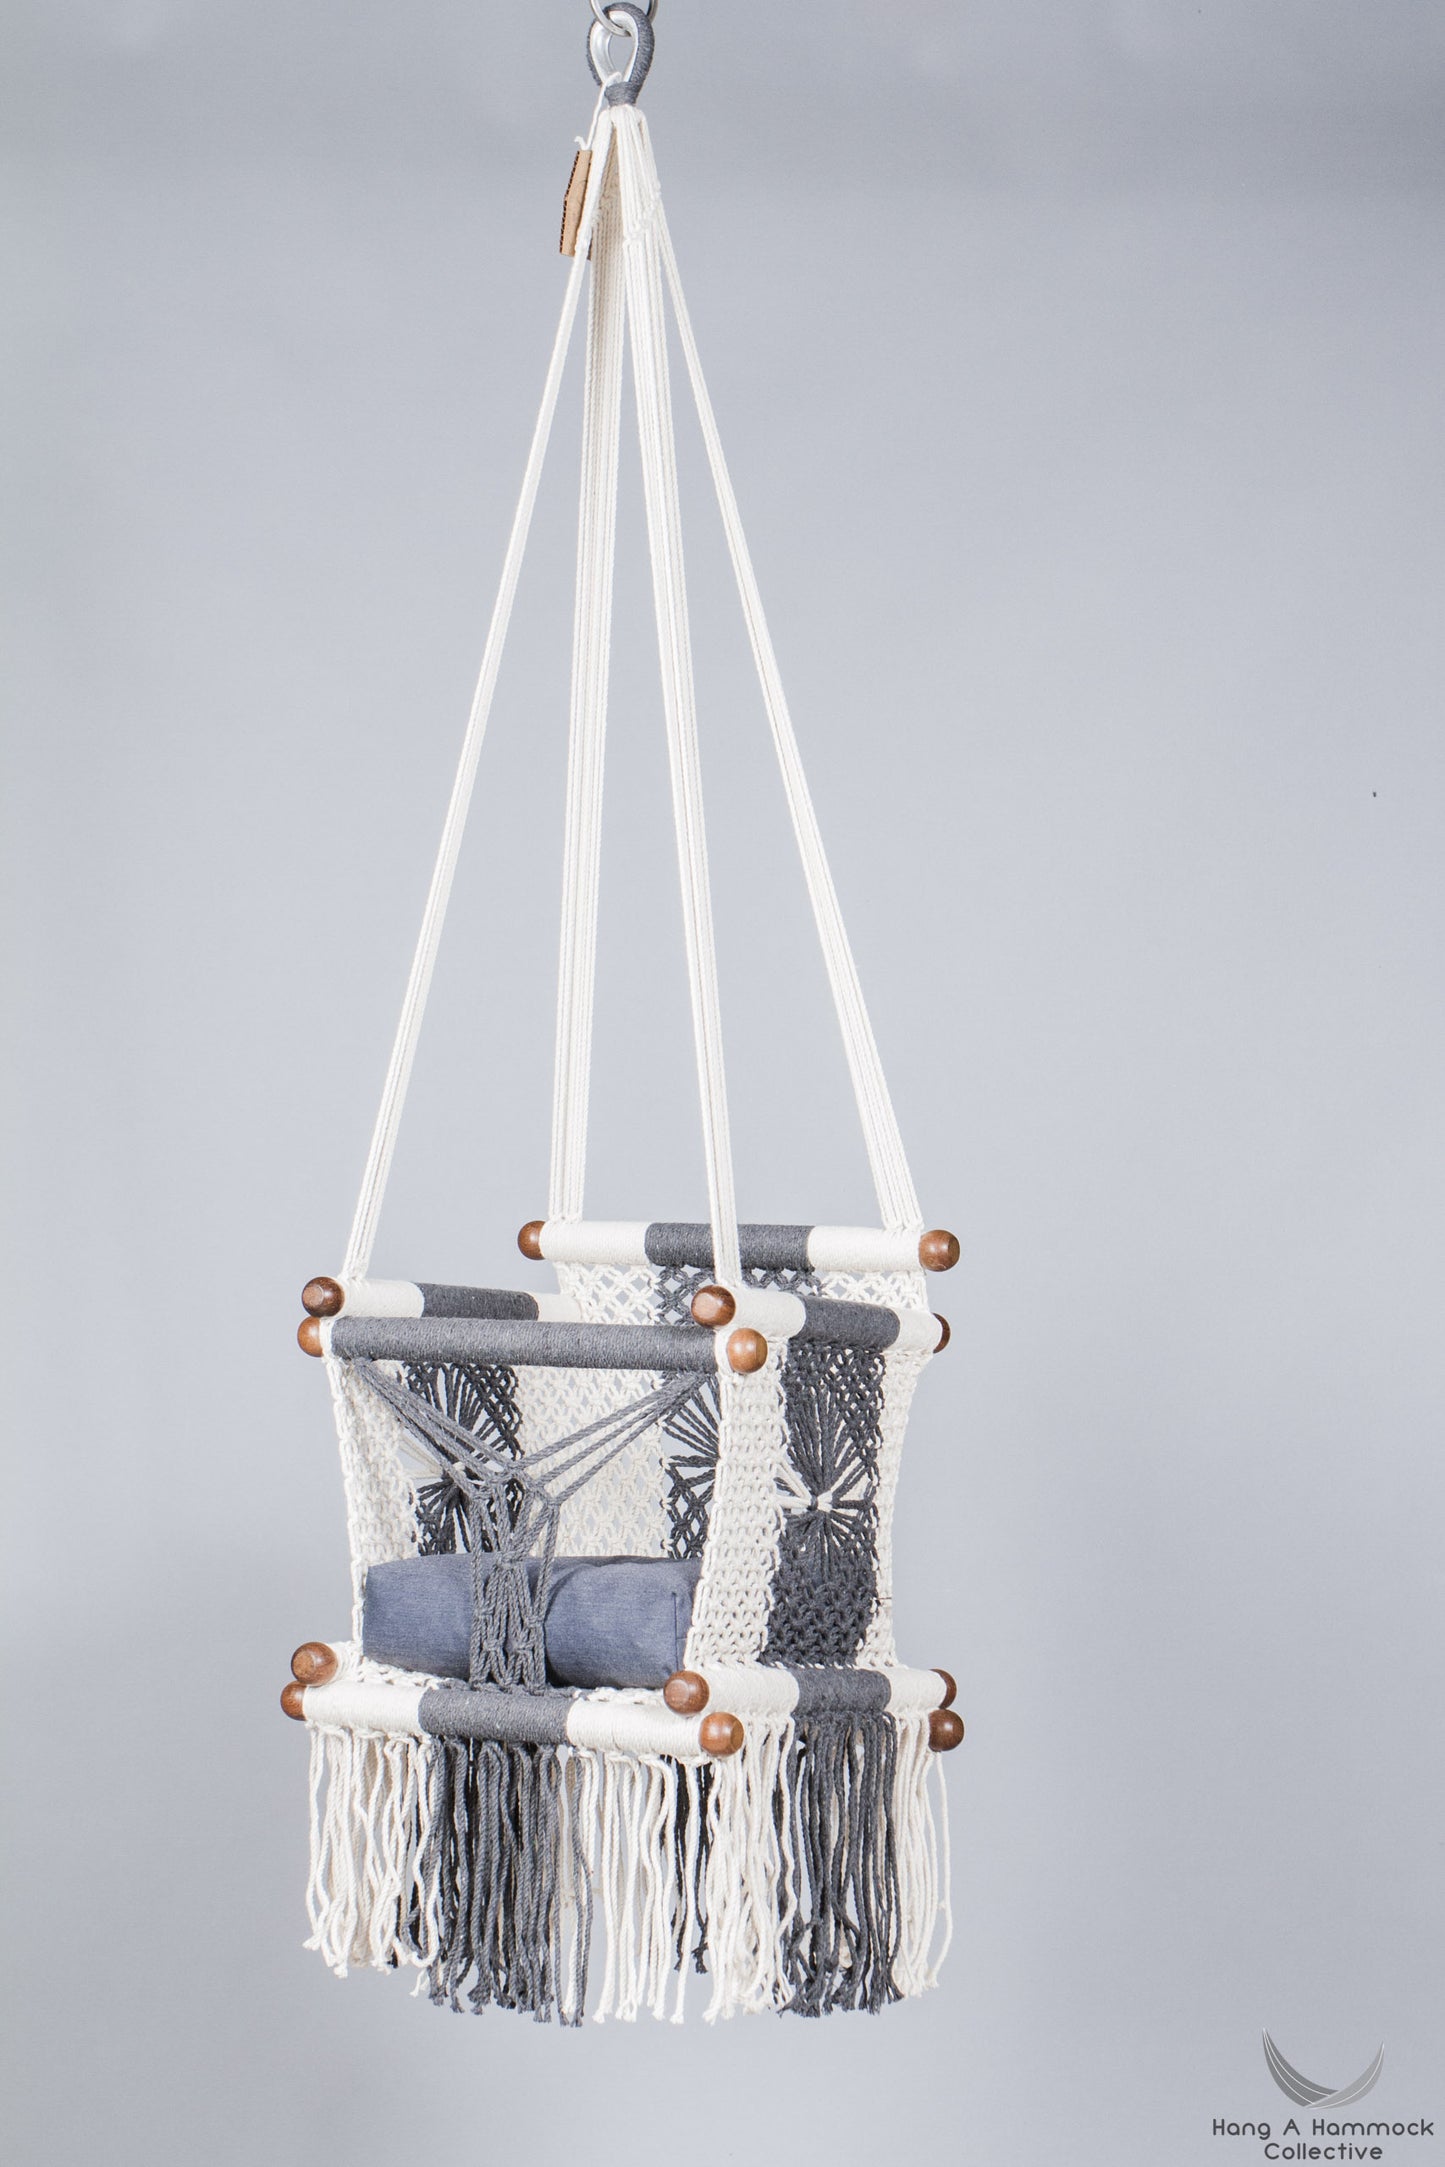 [hammocks and baby hanging chairs in macrame] - hangahammockcollective